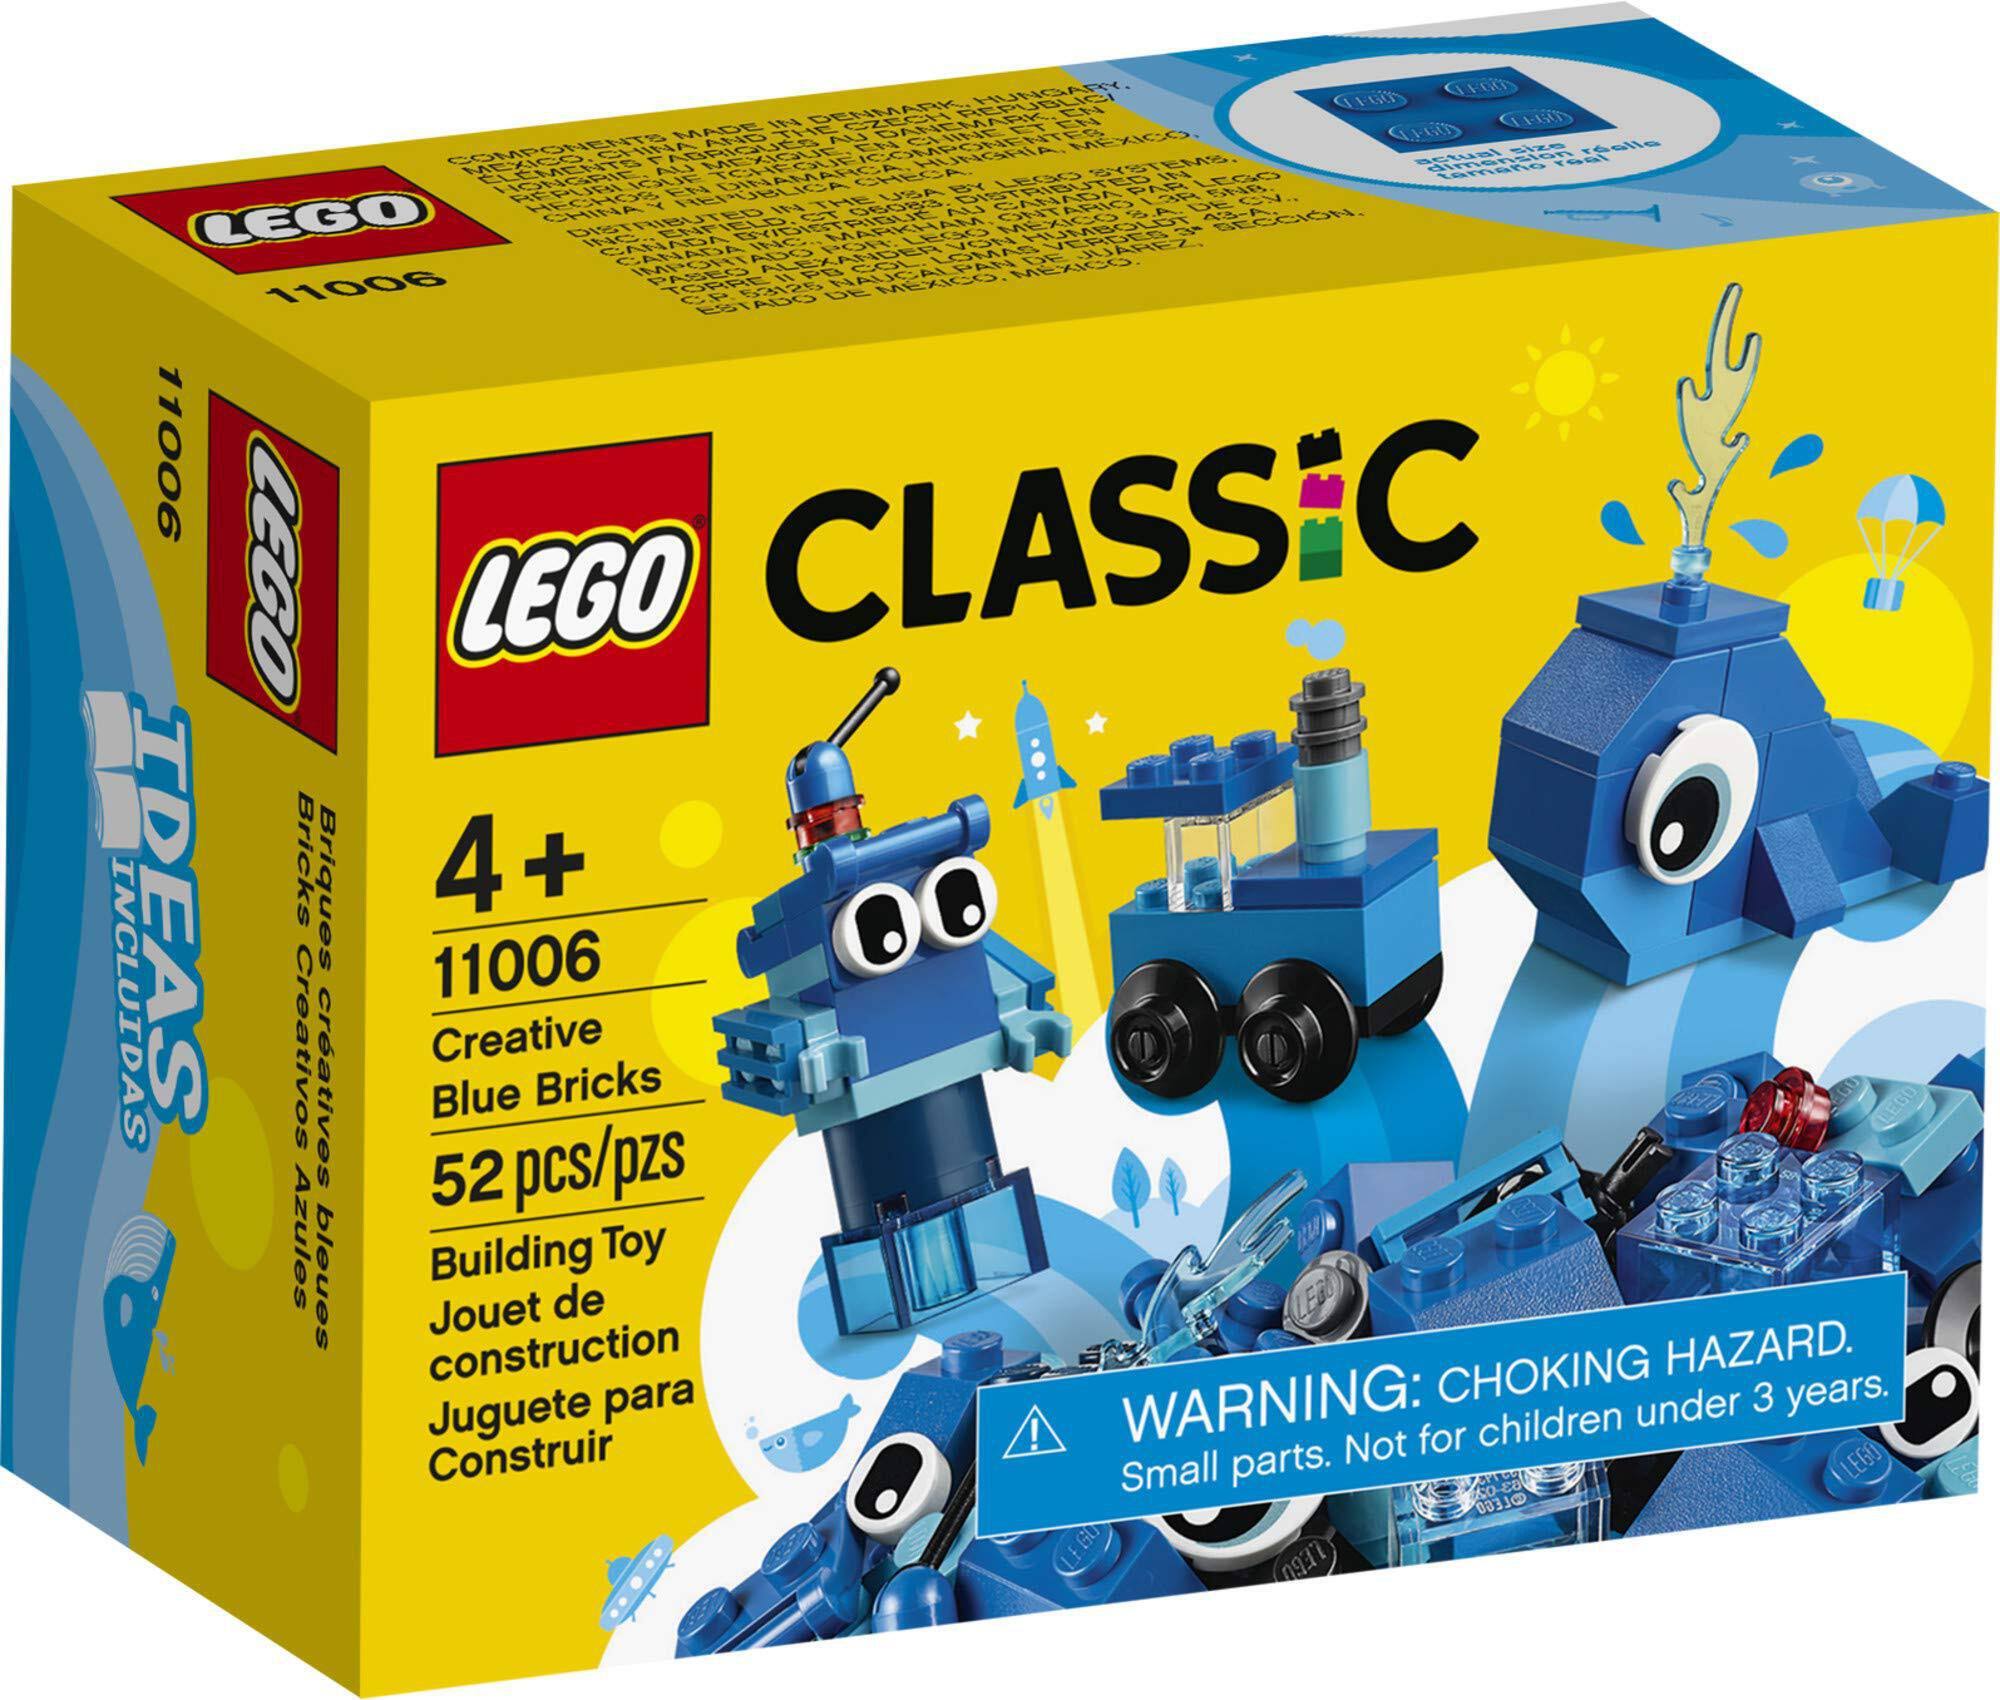 LEGO Classic Creative Blue Bricks 11006 Kids Building Toy Starter Set